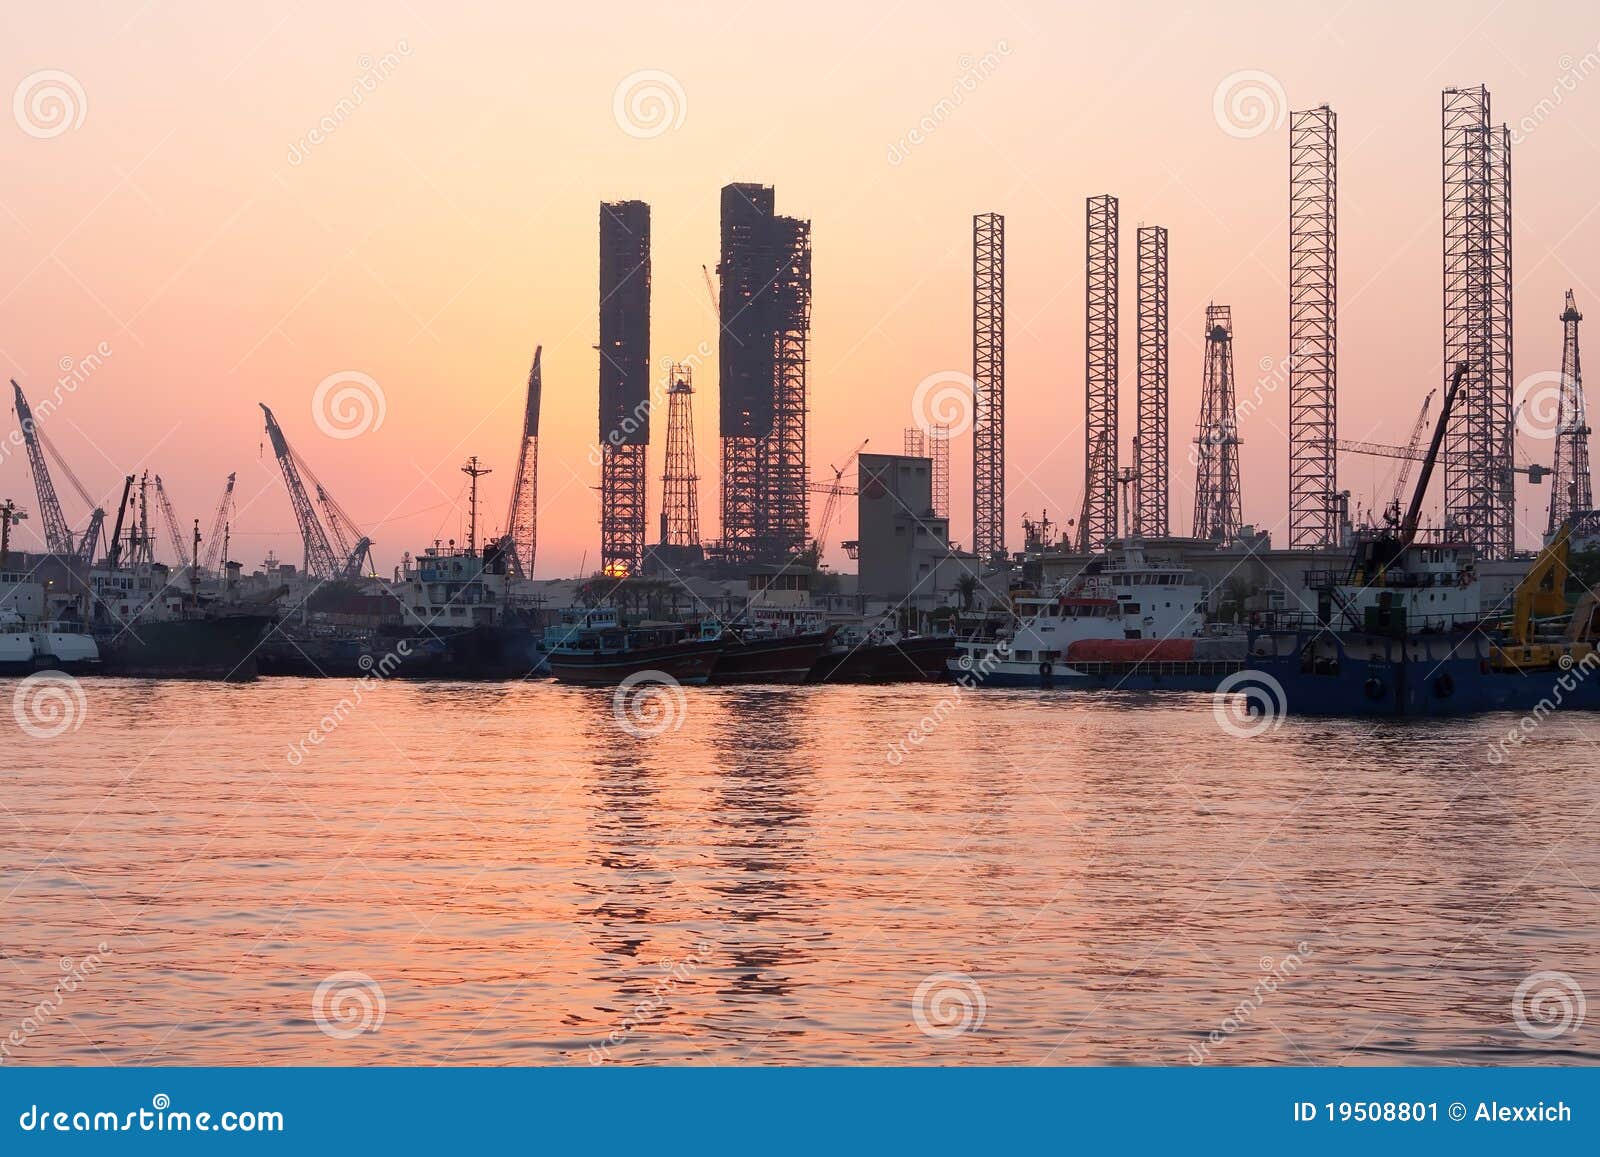 oil rigs at sunset, sharjah, uae